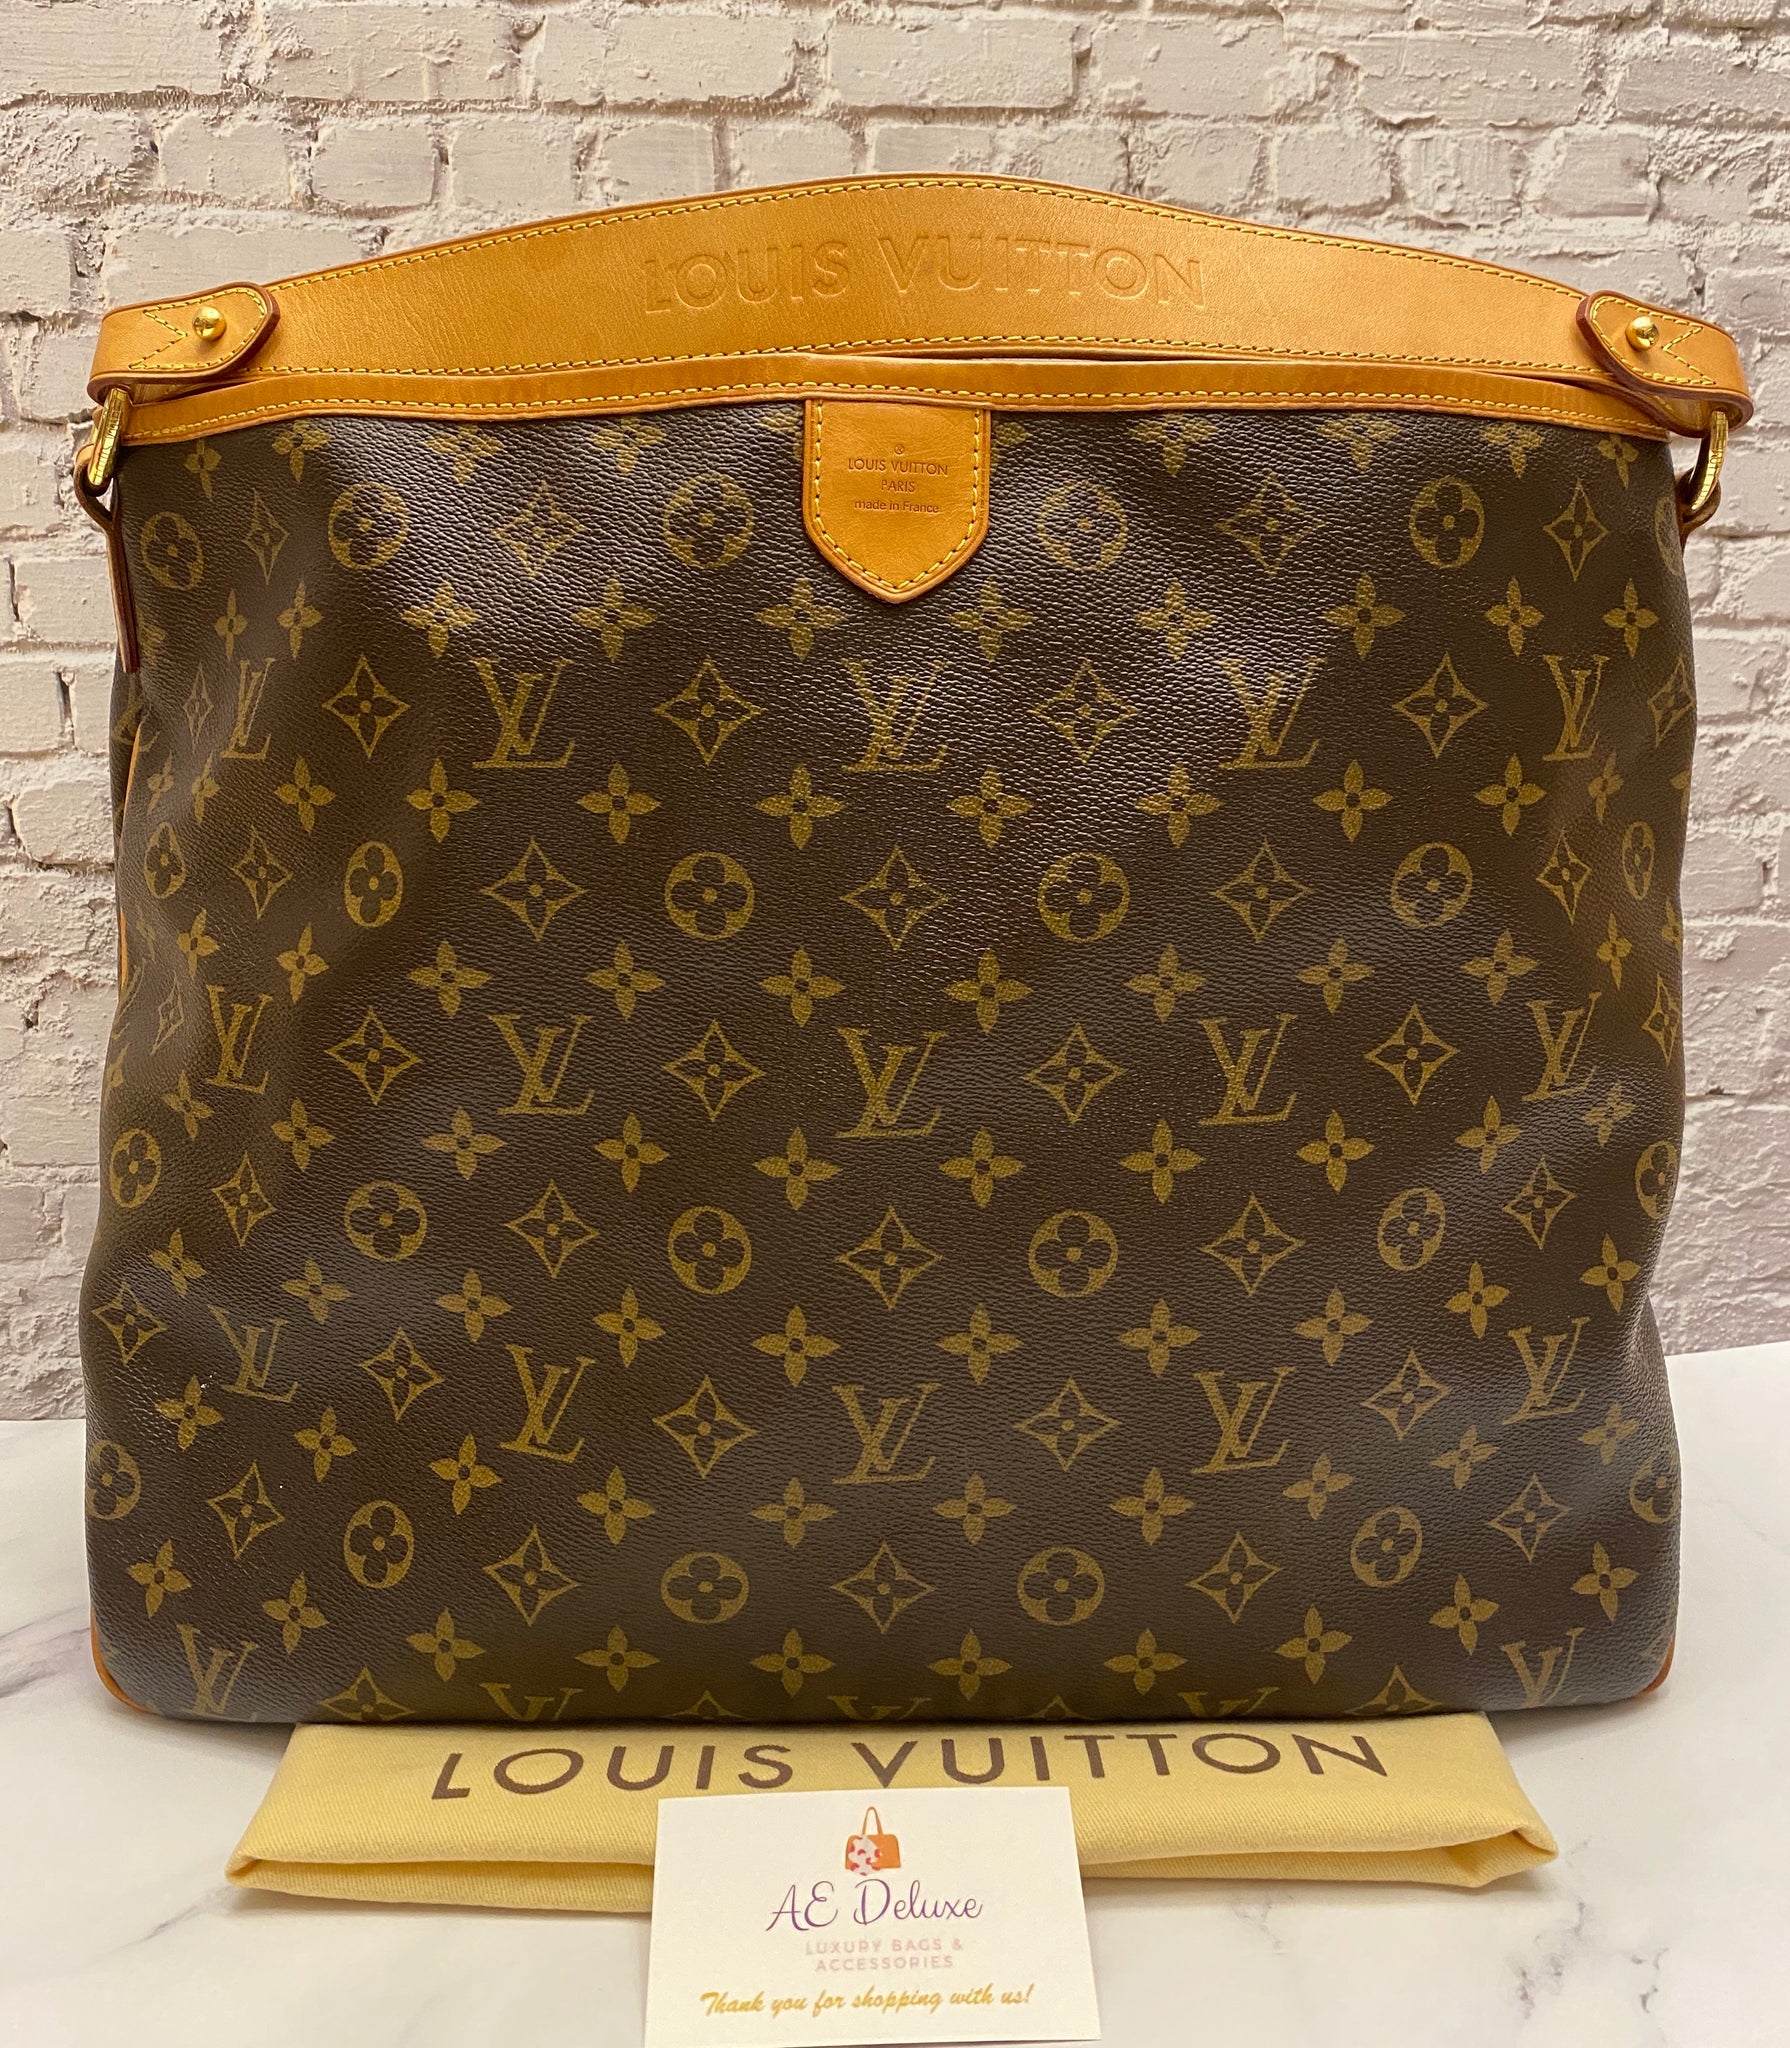 Louis Vuitton Delightful monogrammed bag